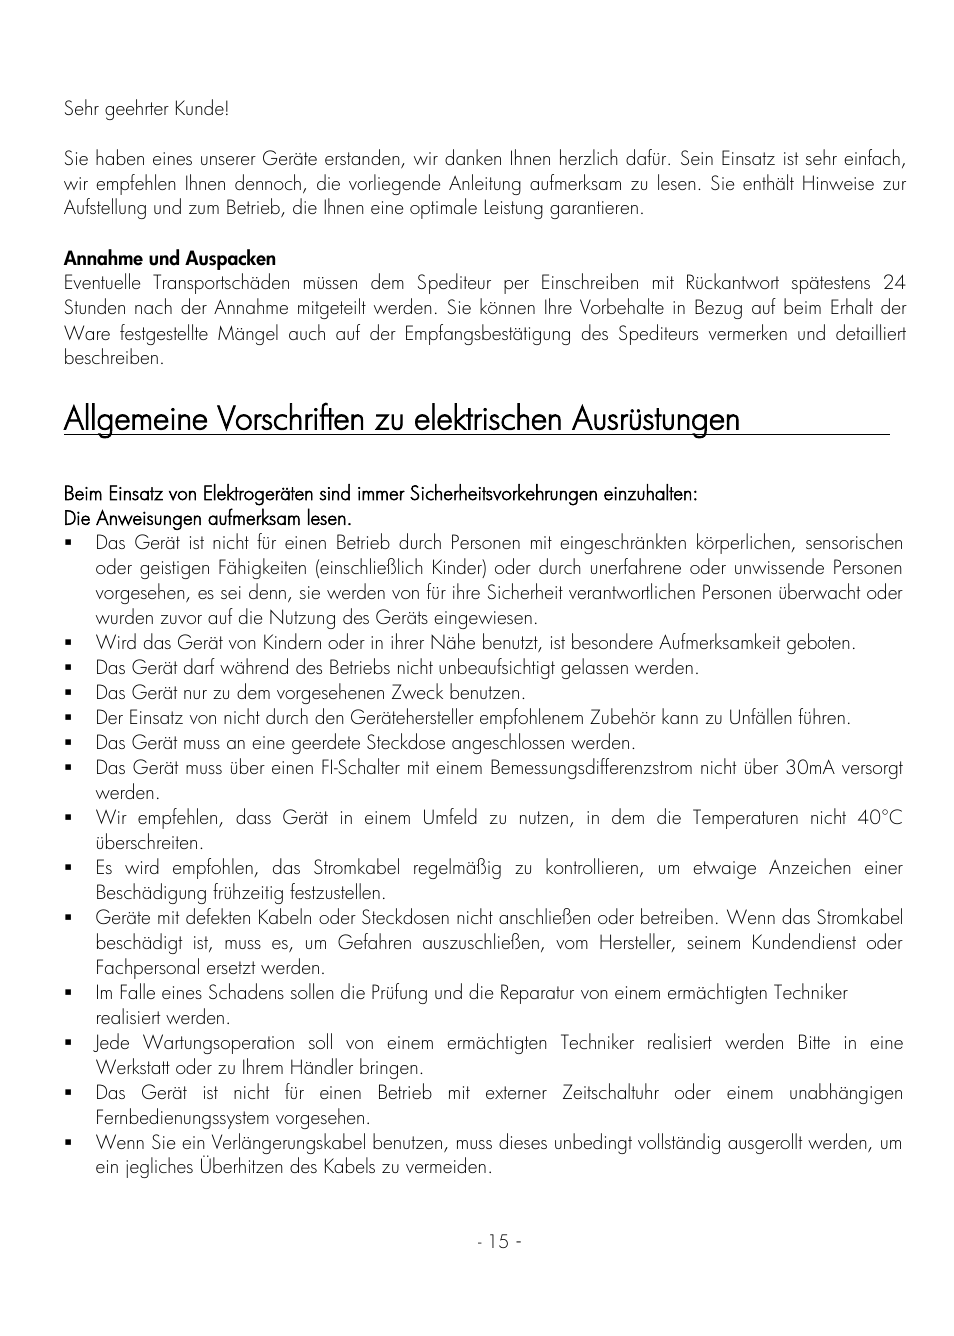 Krampouz Deliss plancha User Manual | Page 15 / 28 | Original mode